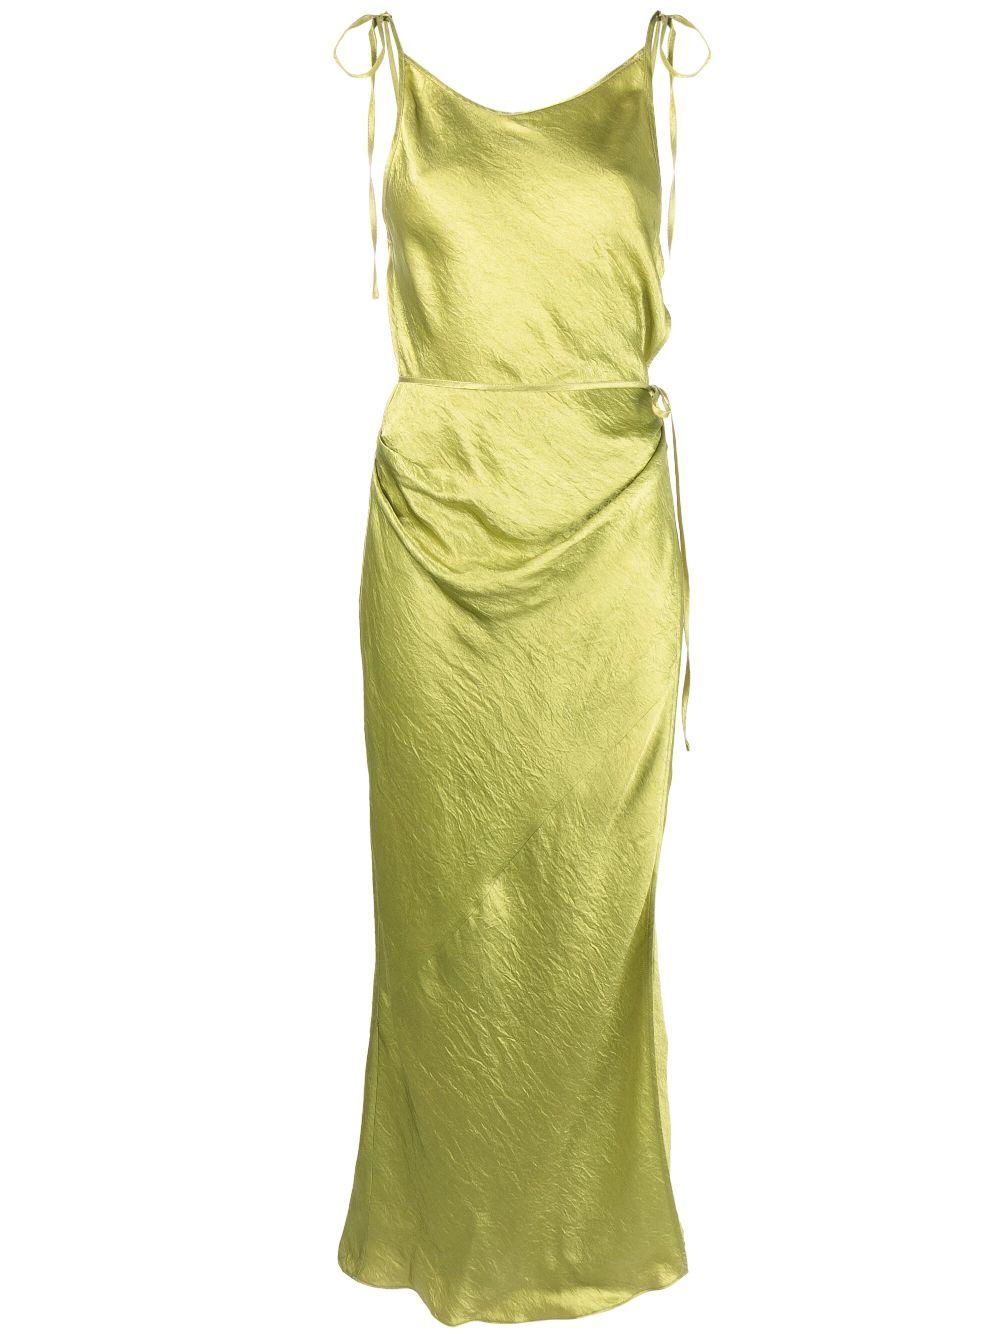 Acne Studios Crinkled Satin Wrap Dress in Yellow | Lyst Australia